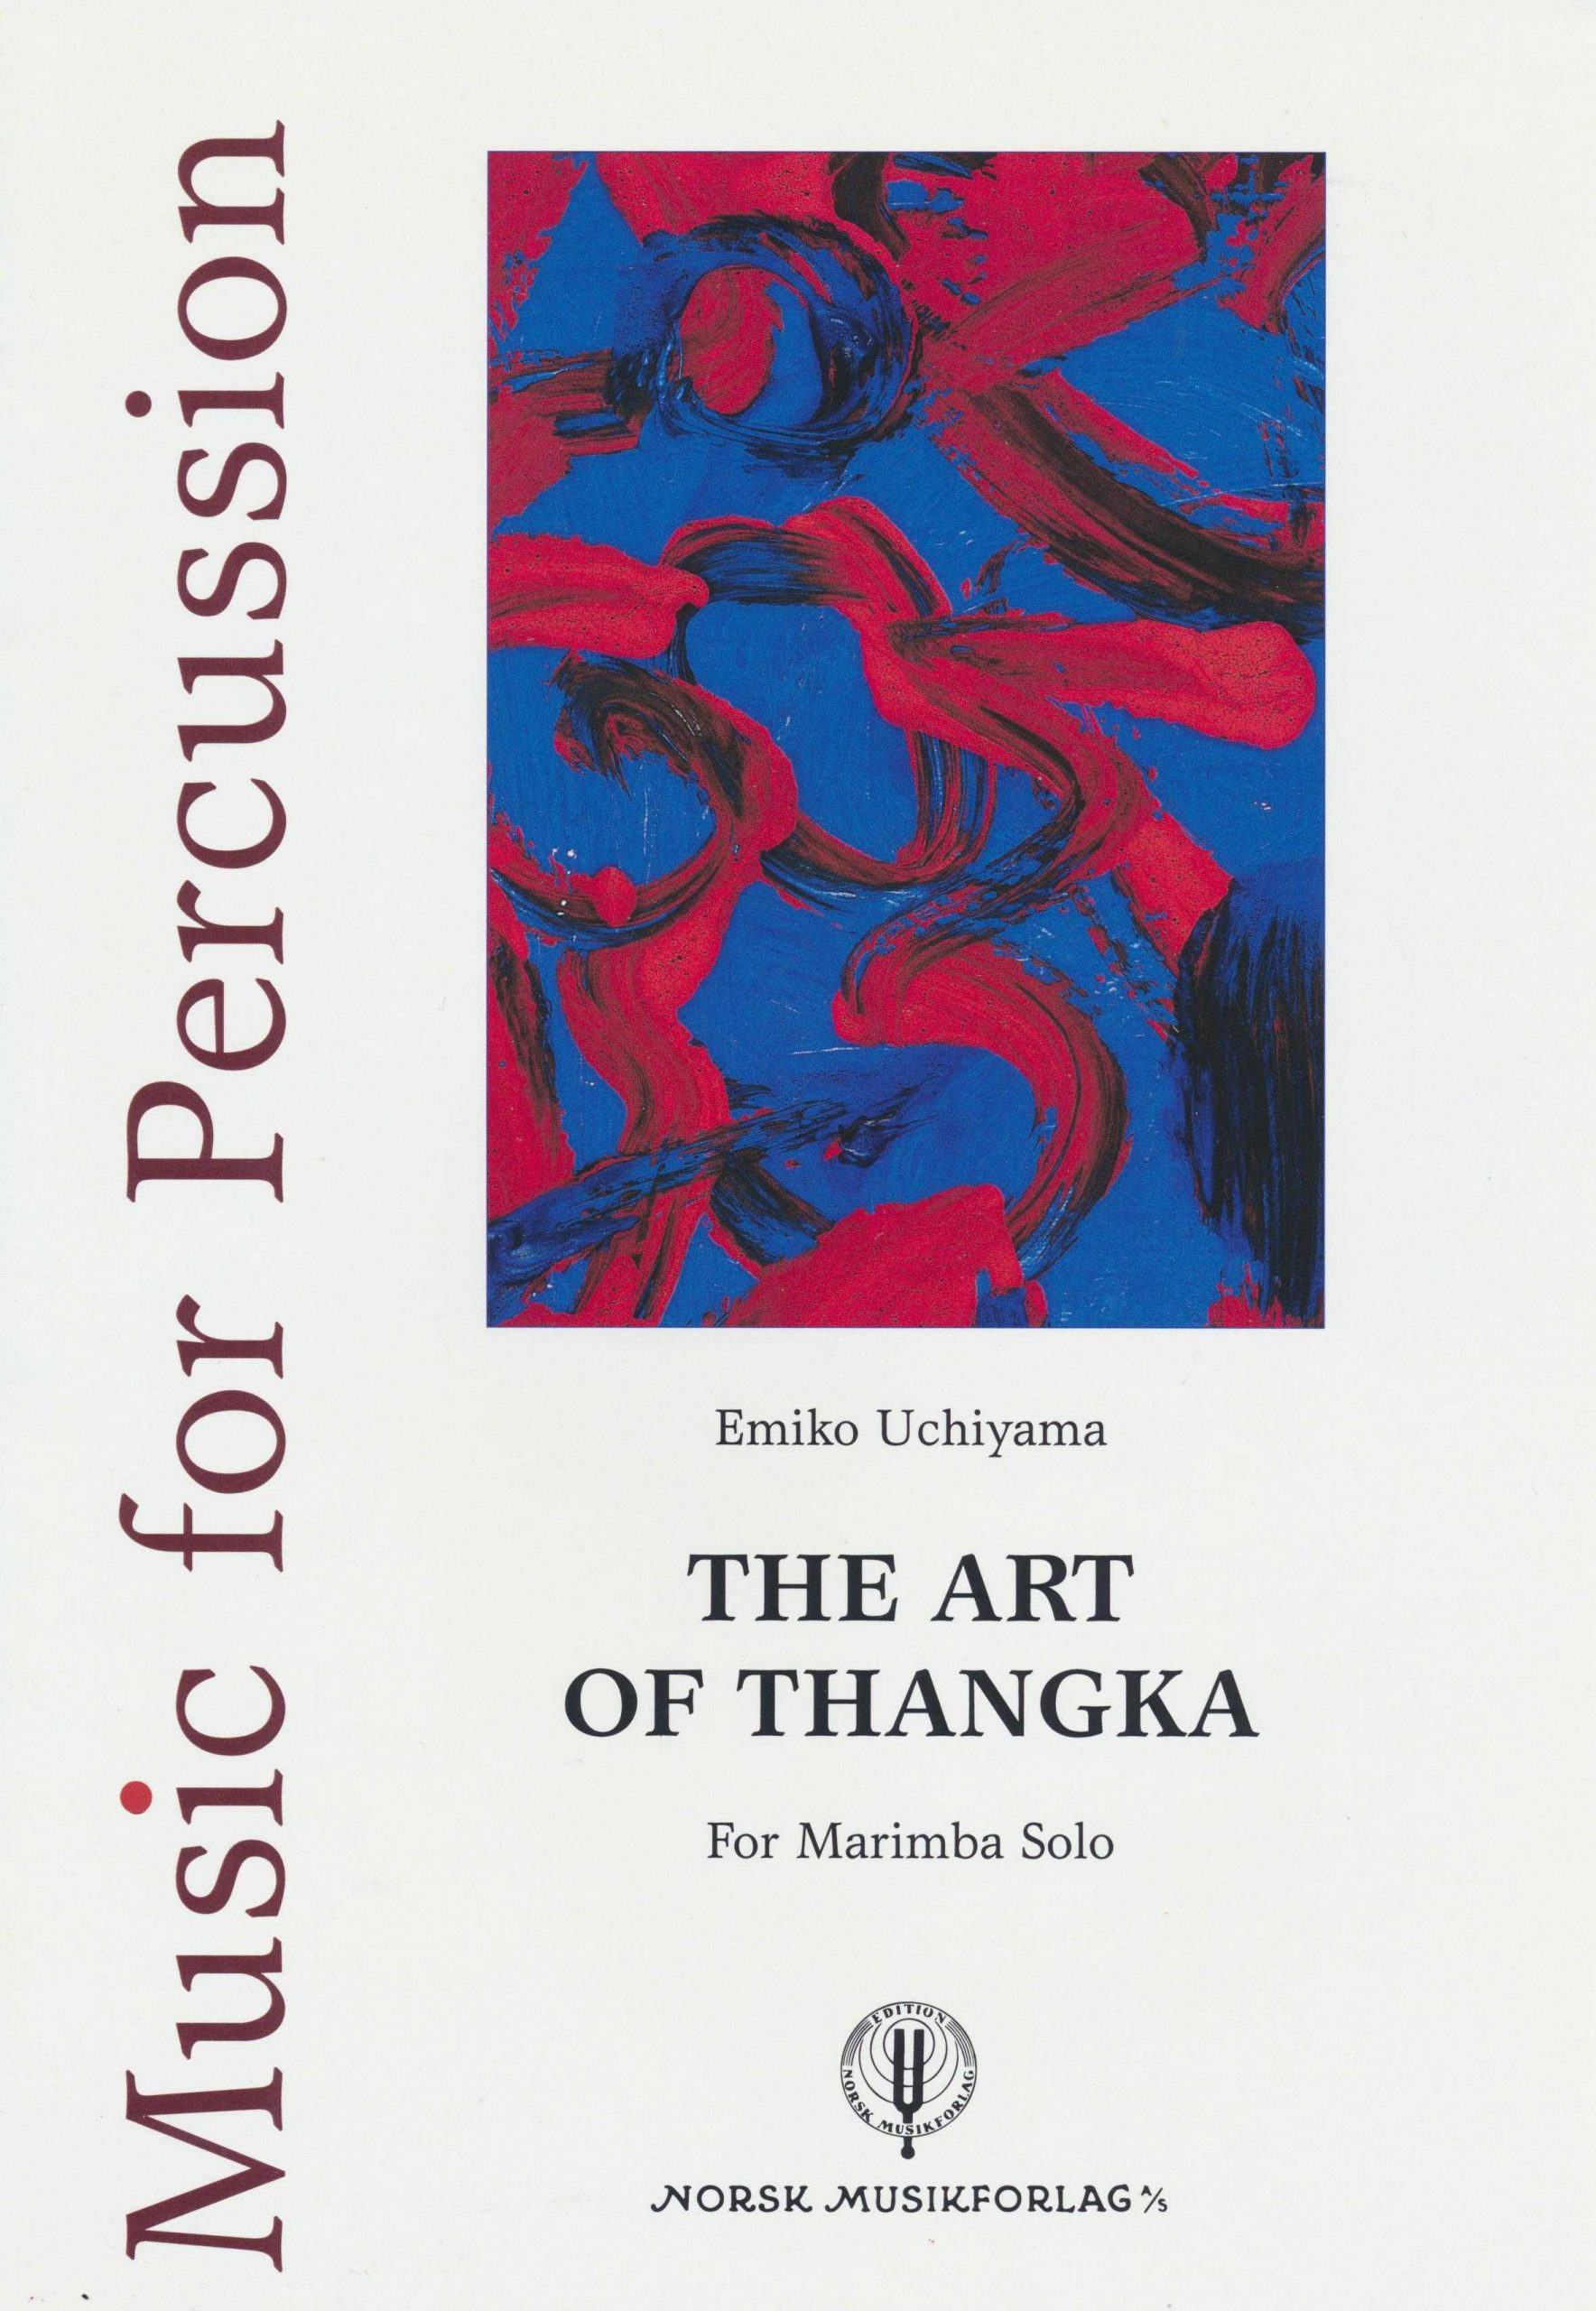 The Art of Thangka by Emiko Uchiyama